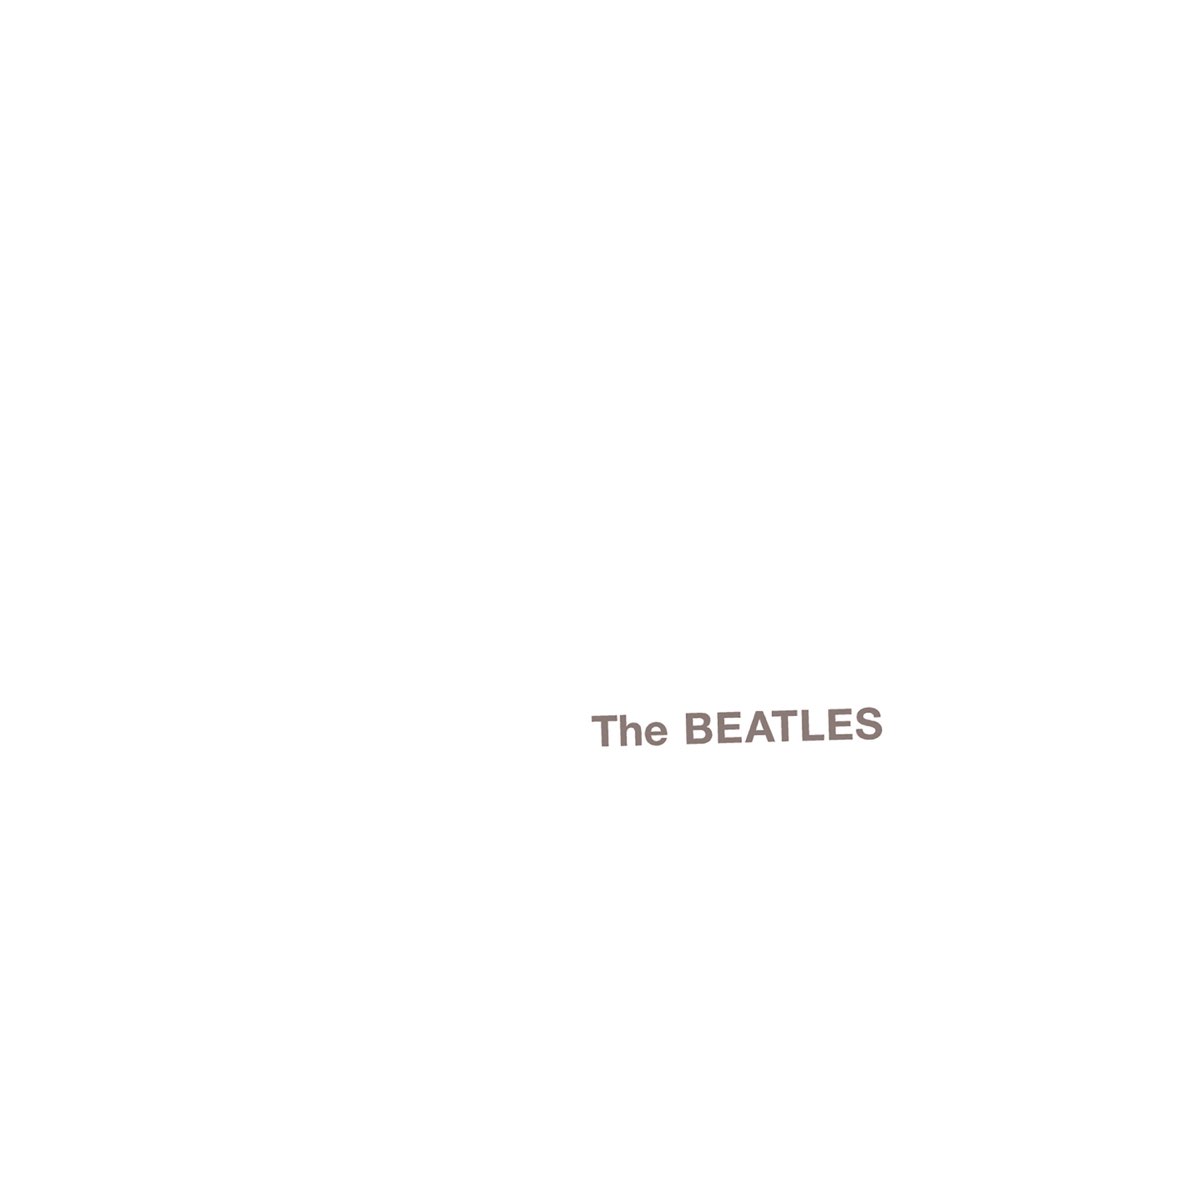 The Beatles — The Beatles (The White Album) cover artwork